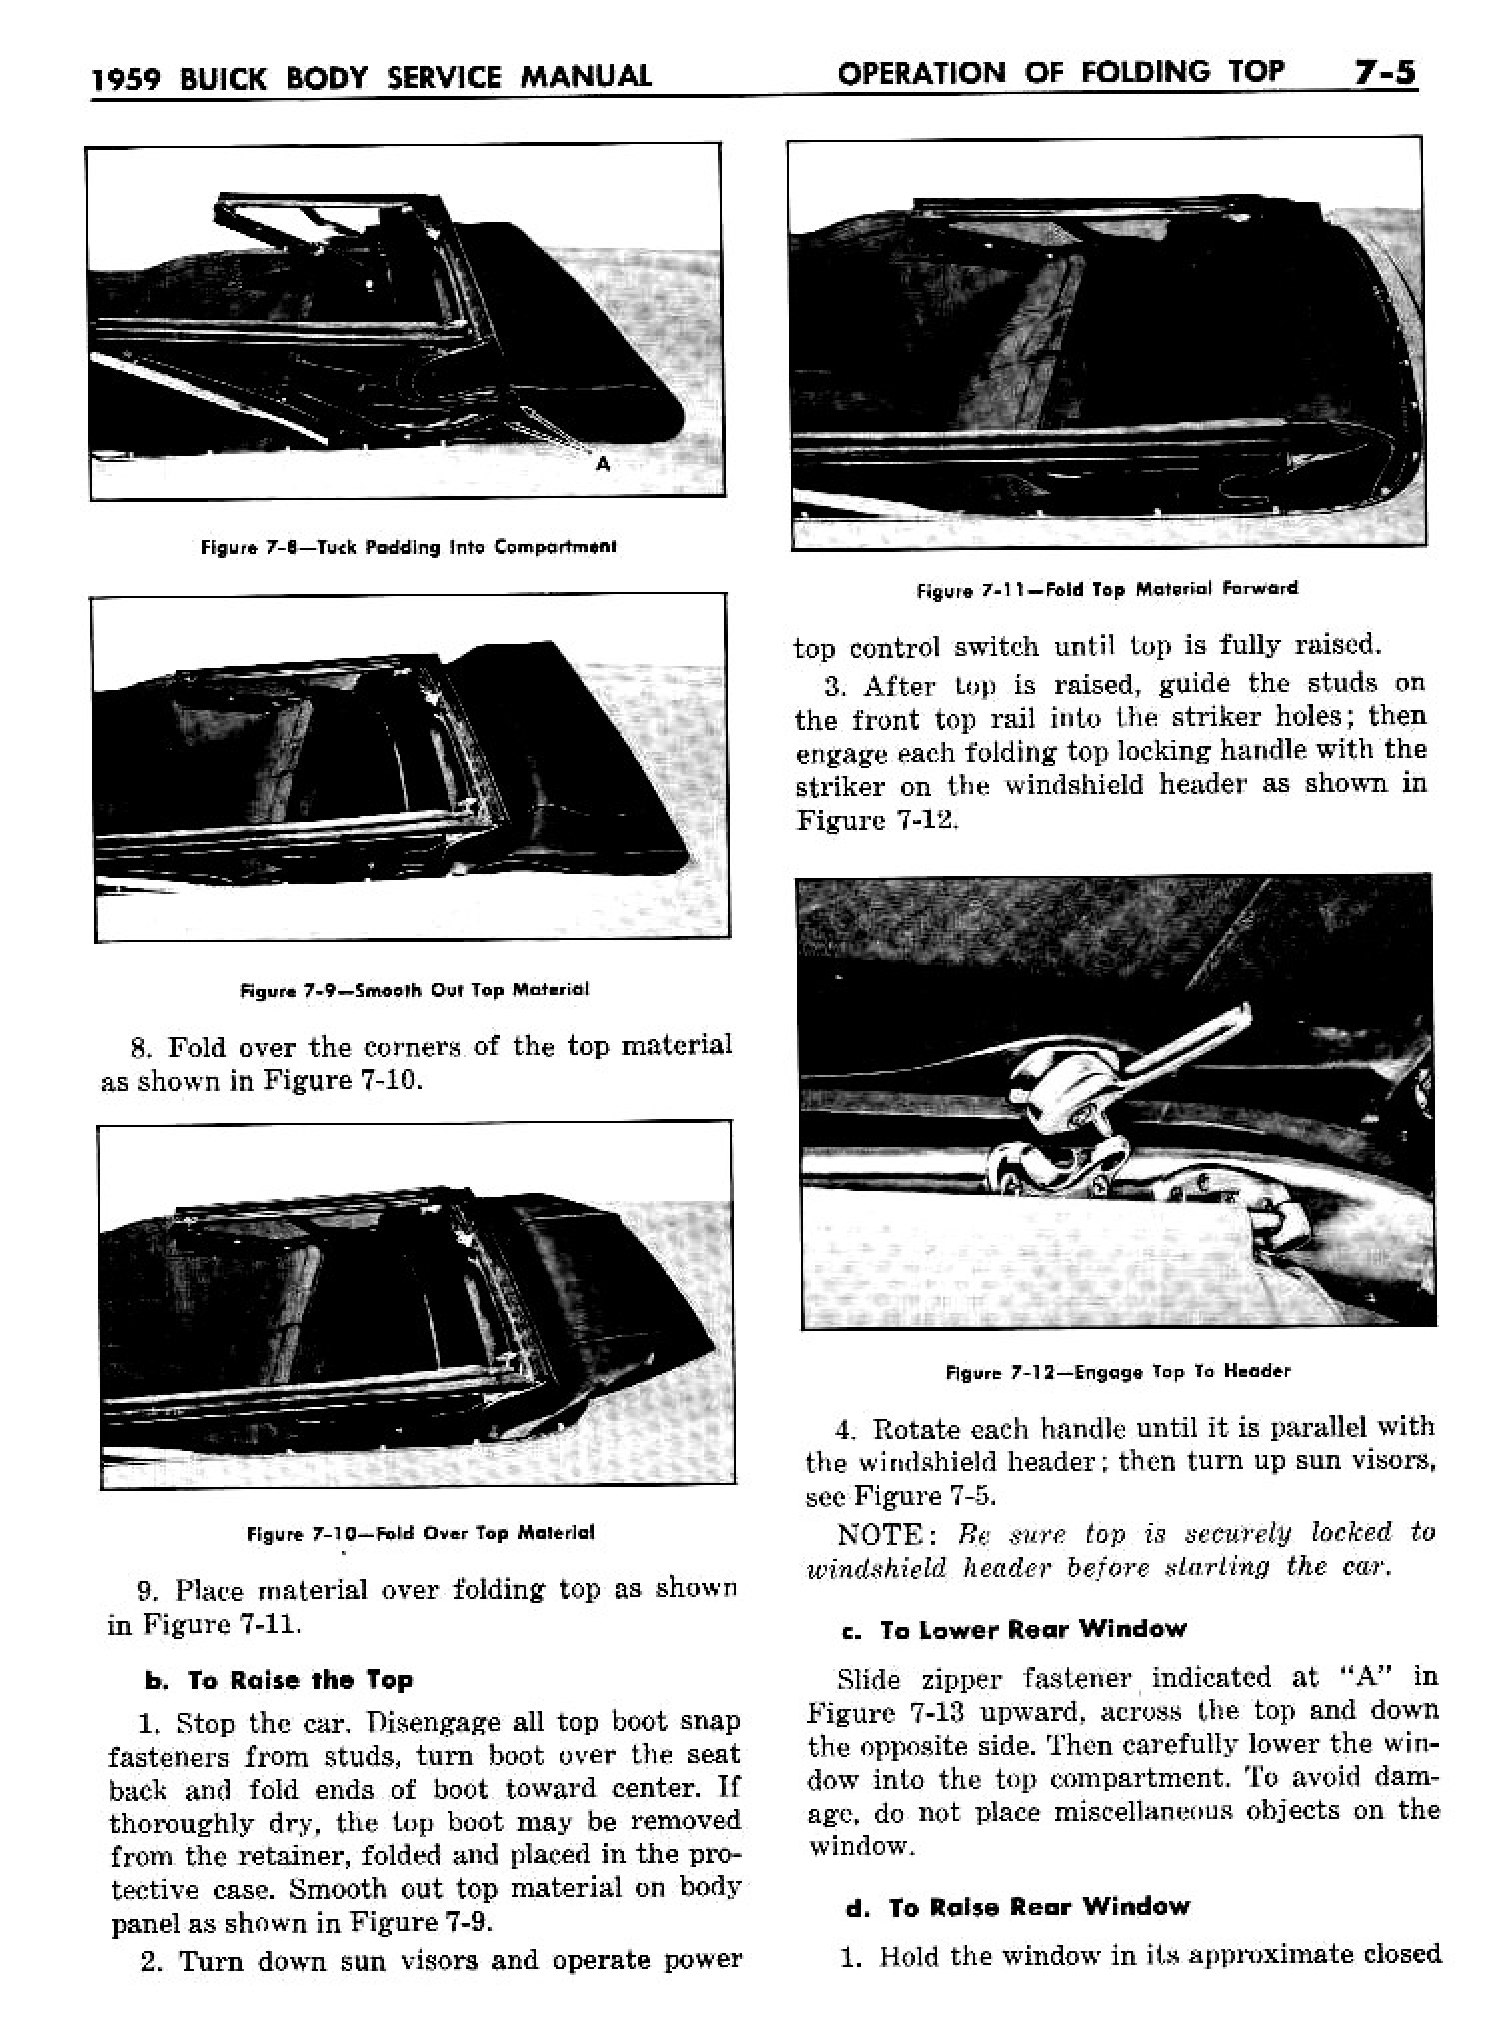 n_08 1959 Buick Body Service-Folding Top_5.jpg